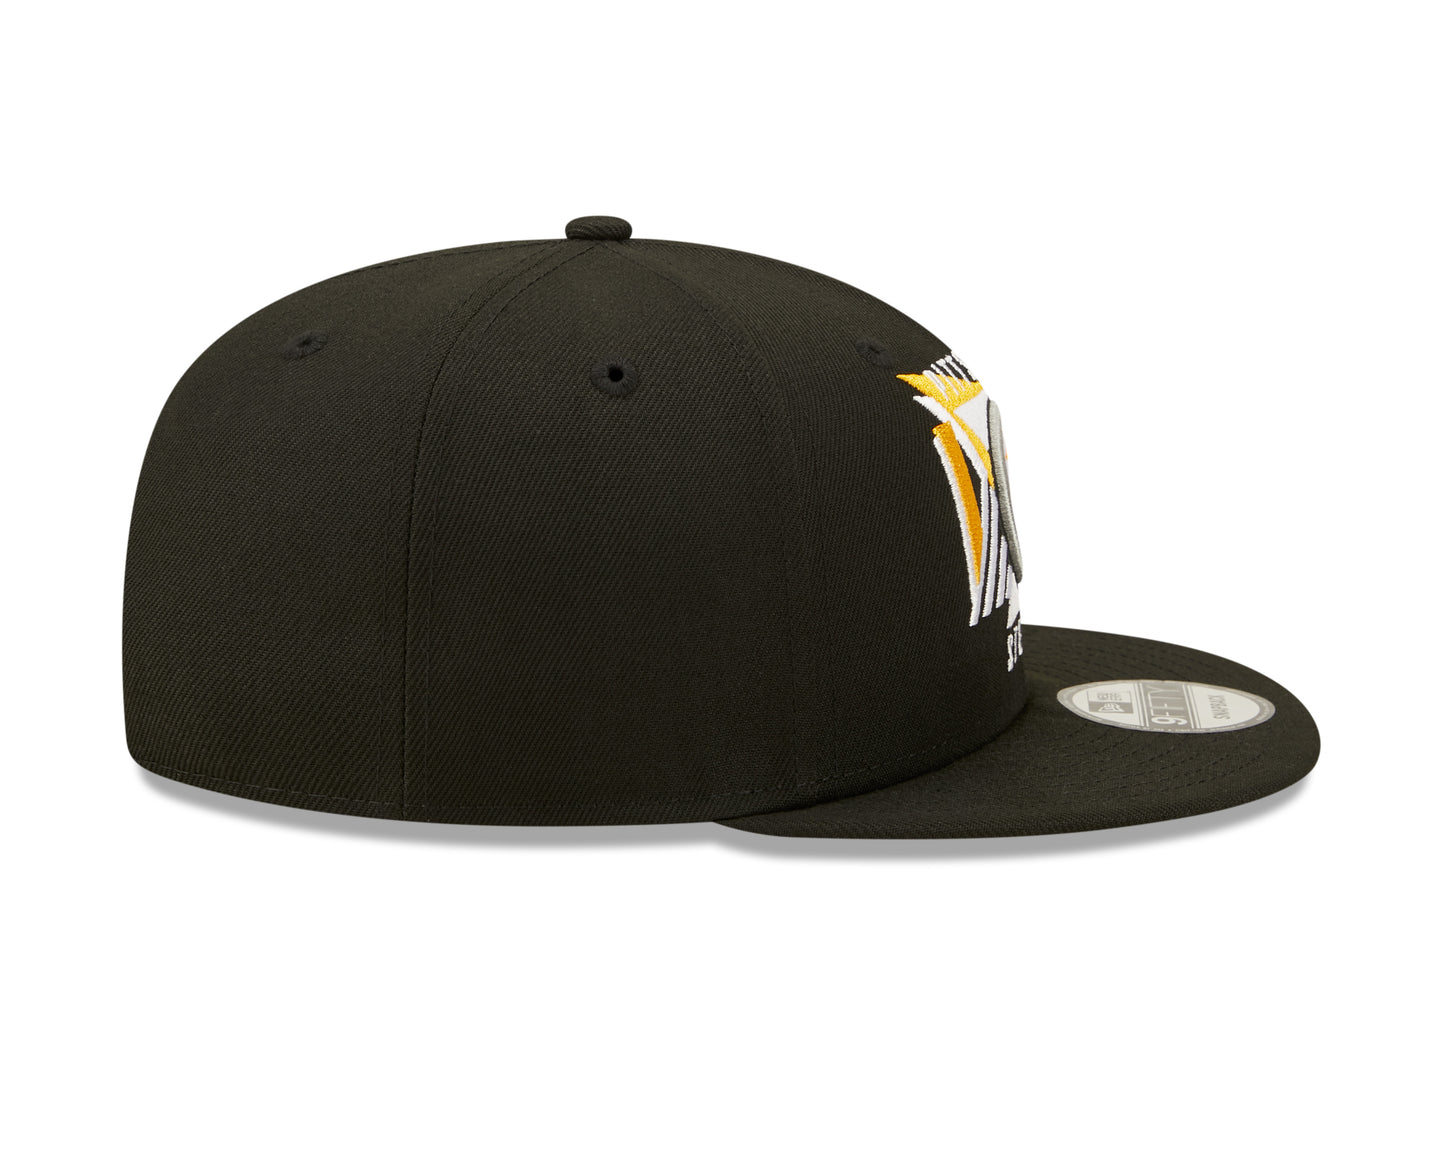 Pittsburgh Steelers NFL New Era Shapes 9FIFTY Snapback Hat - Black